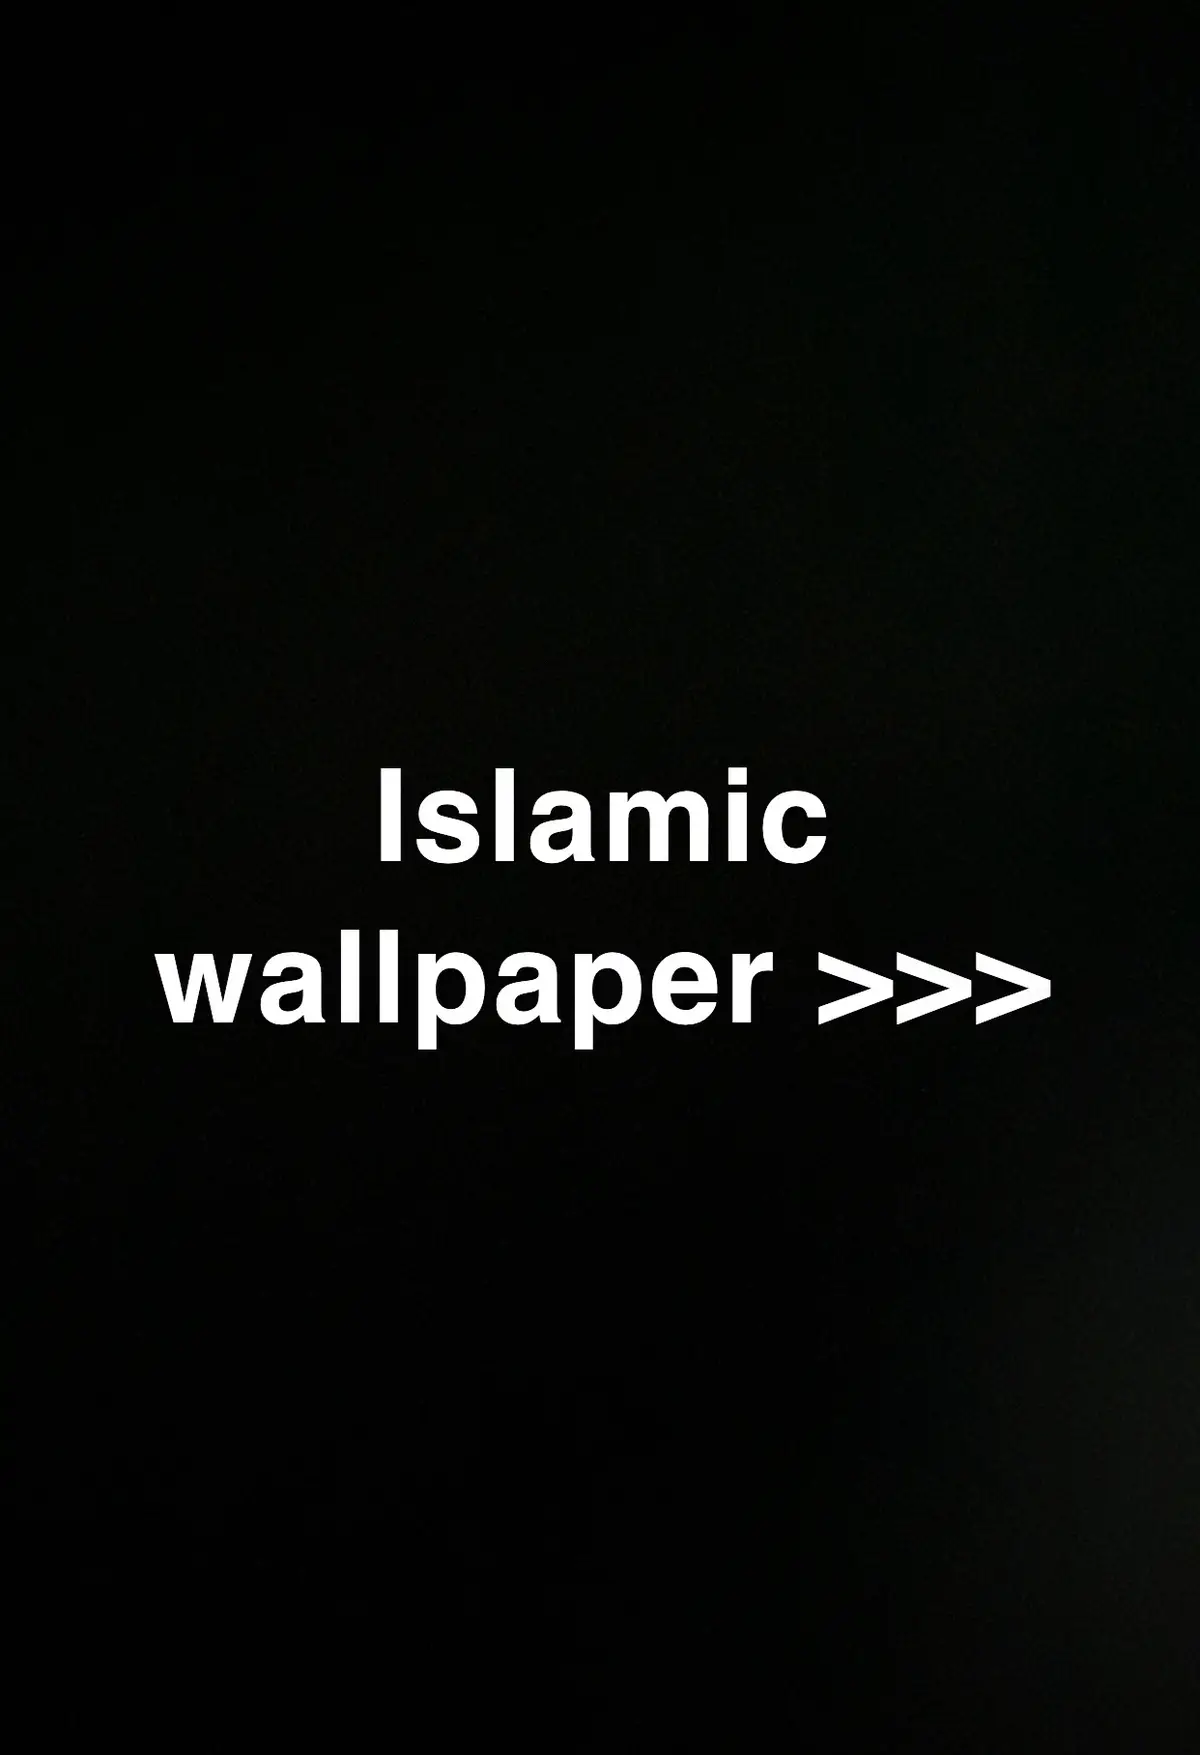 Islamic wallpaper #deen #allah #fyp #foryou #foryoupage #islamic_video #muslim #jannah #quran #islam #islamicreminder #islamicwallpapers 